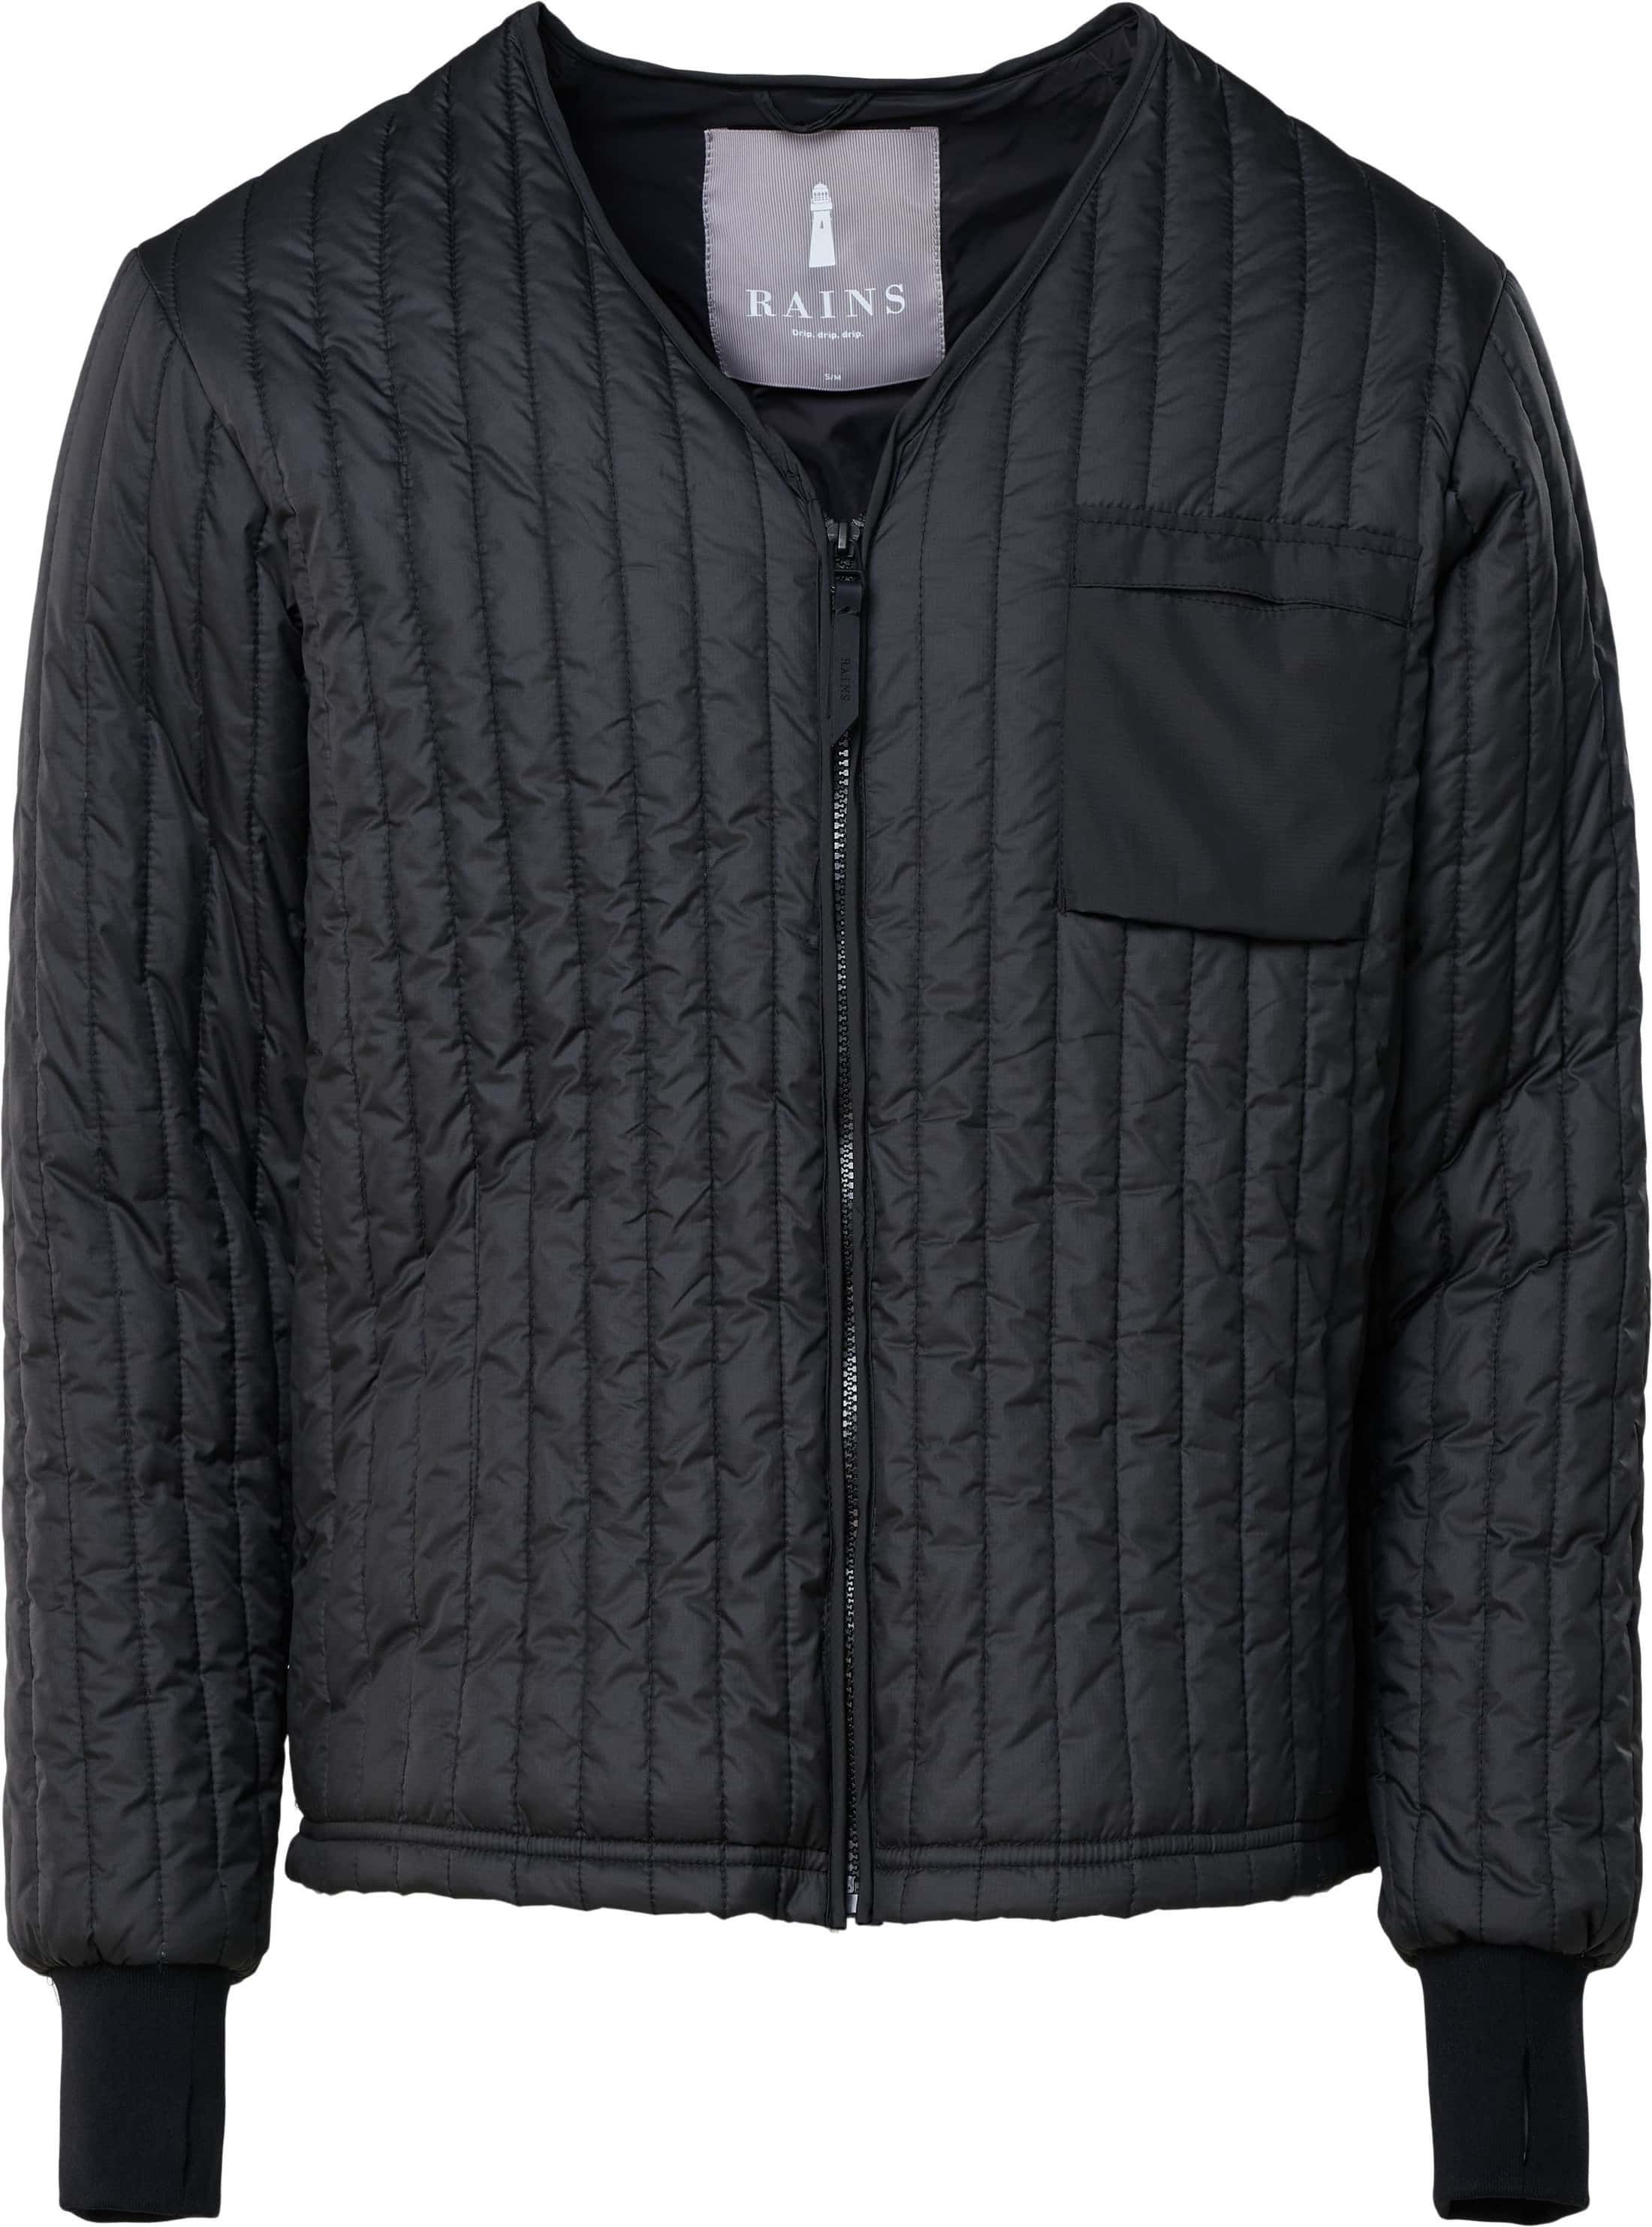 Rains Liner Jacket Black size S/M